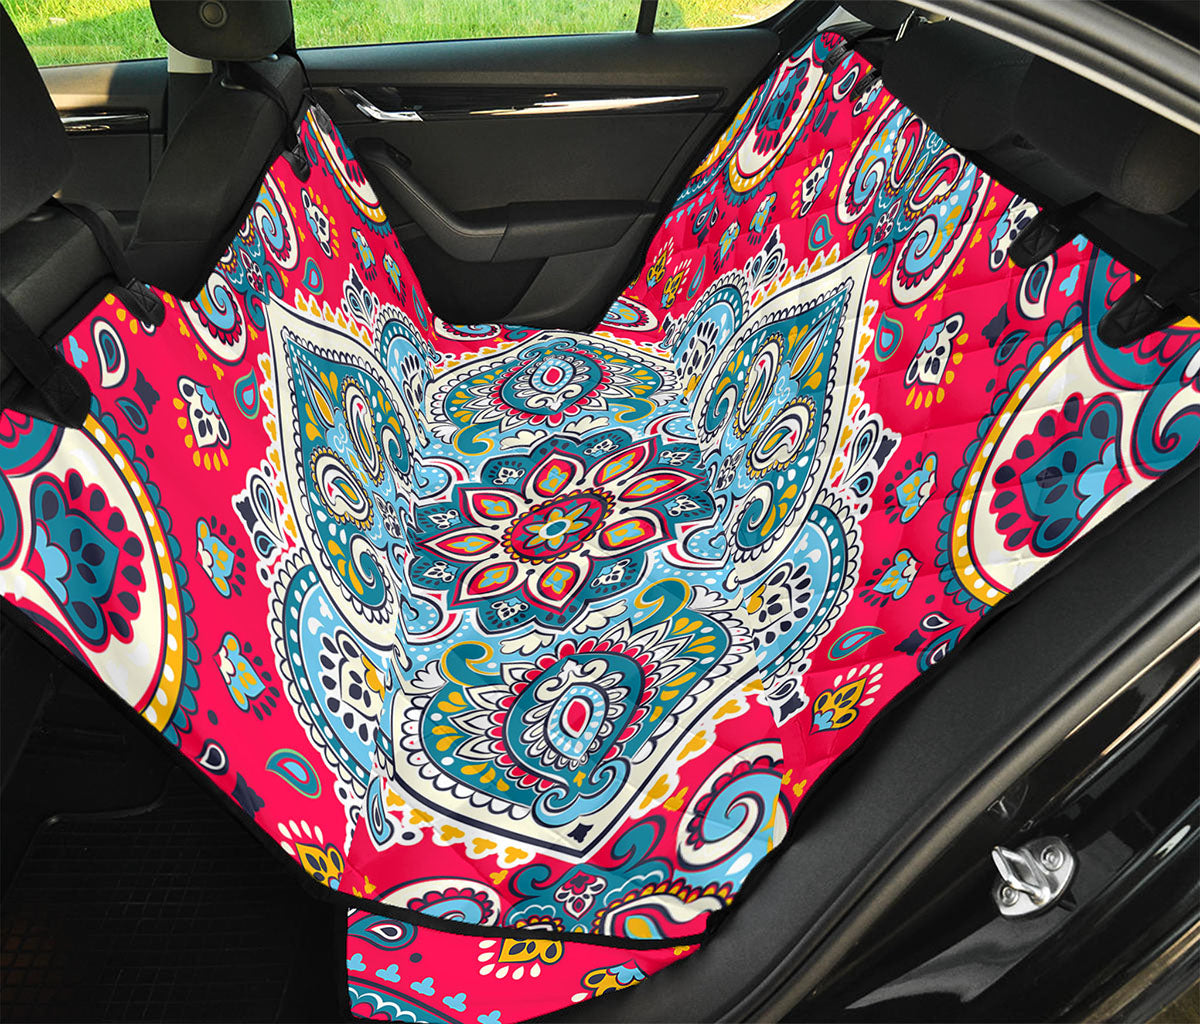 Floral Paisley Mandala Print Pet Car Back Seat Cover